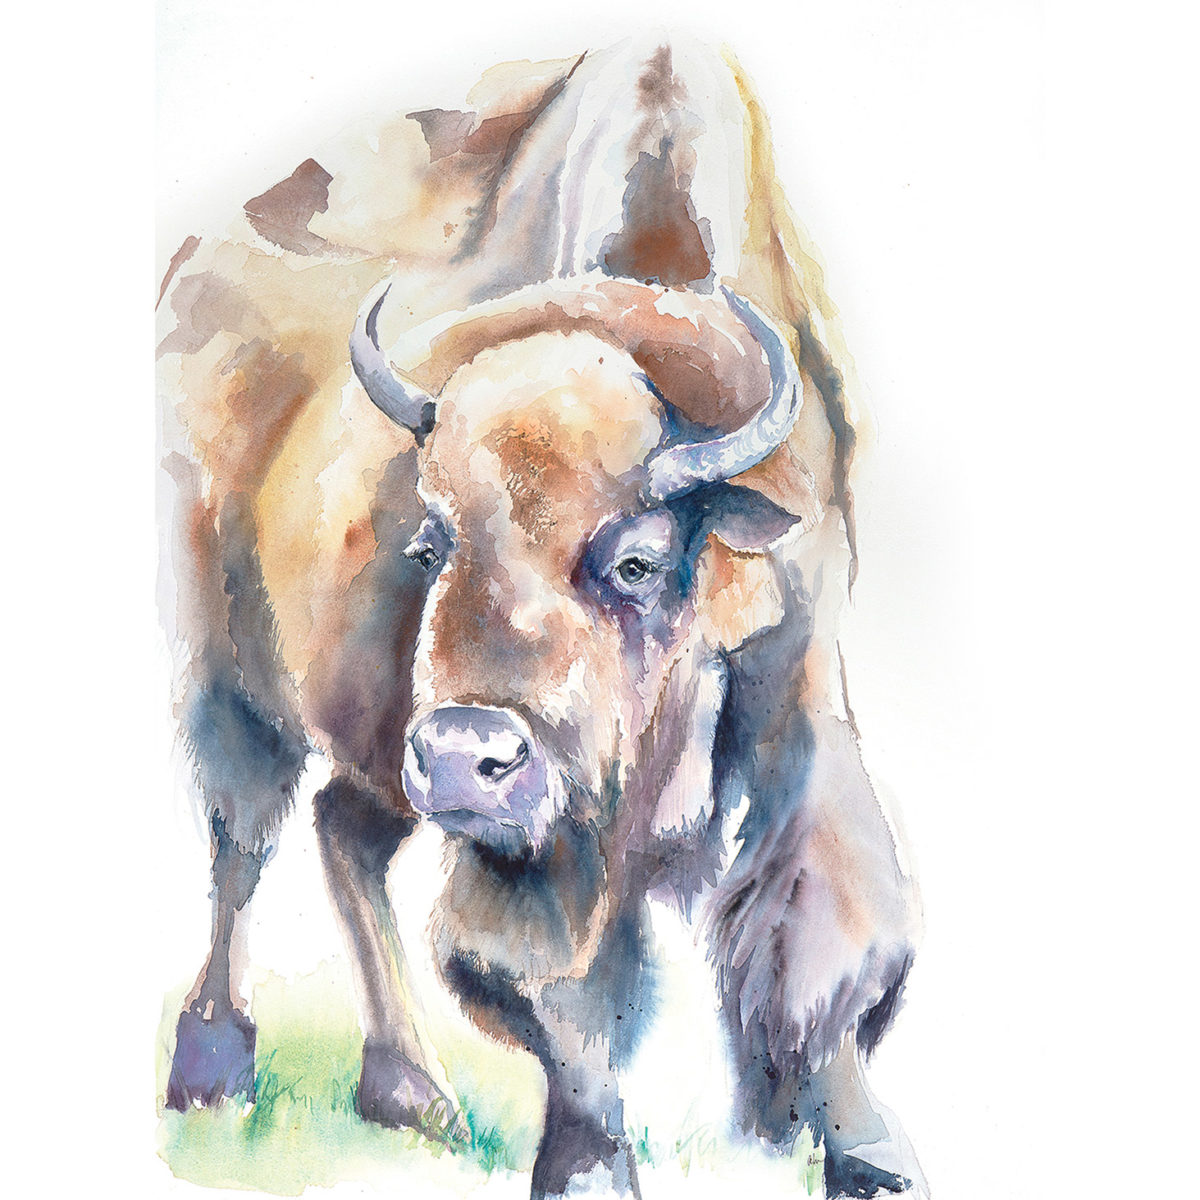 Watercolor of American Bison